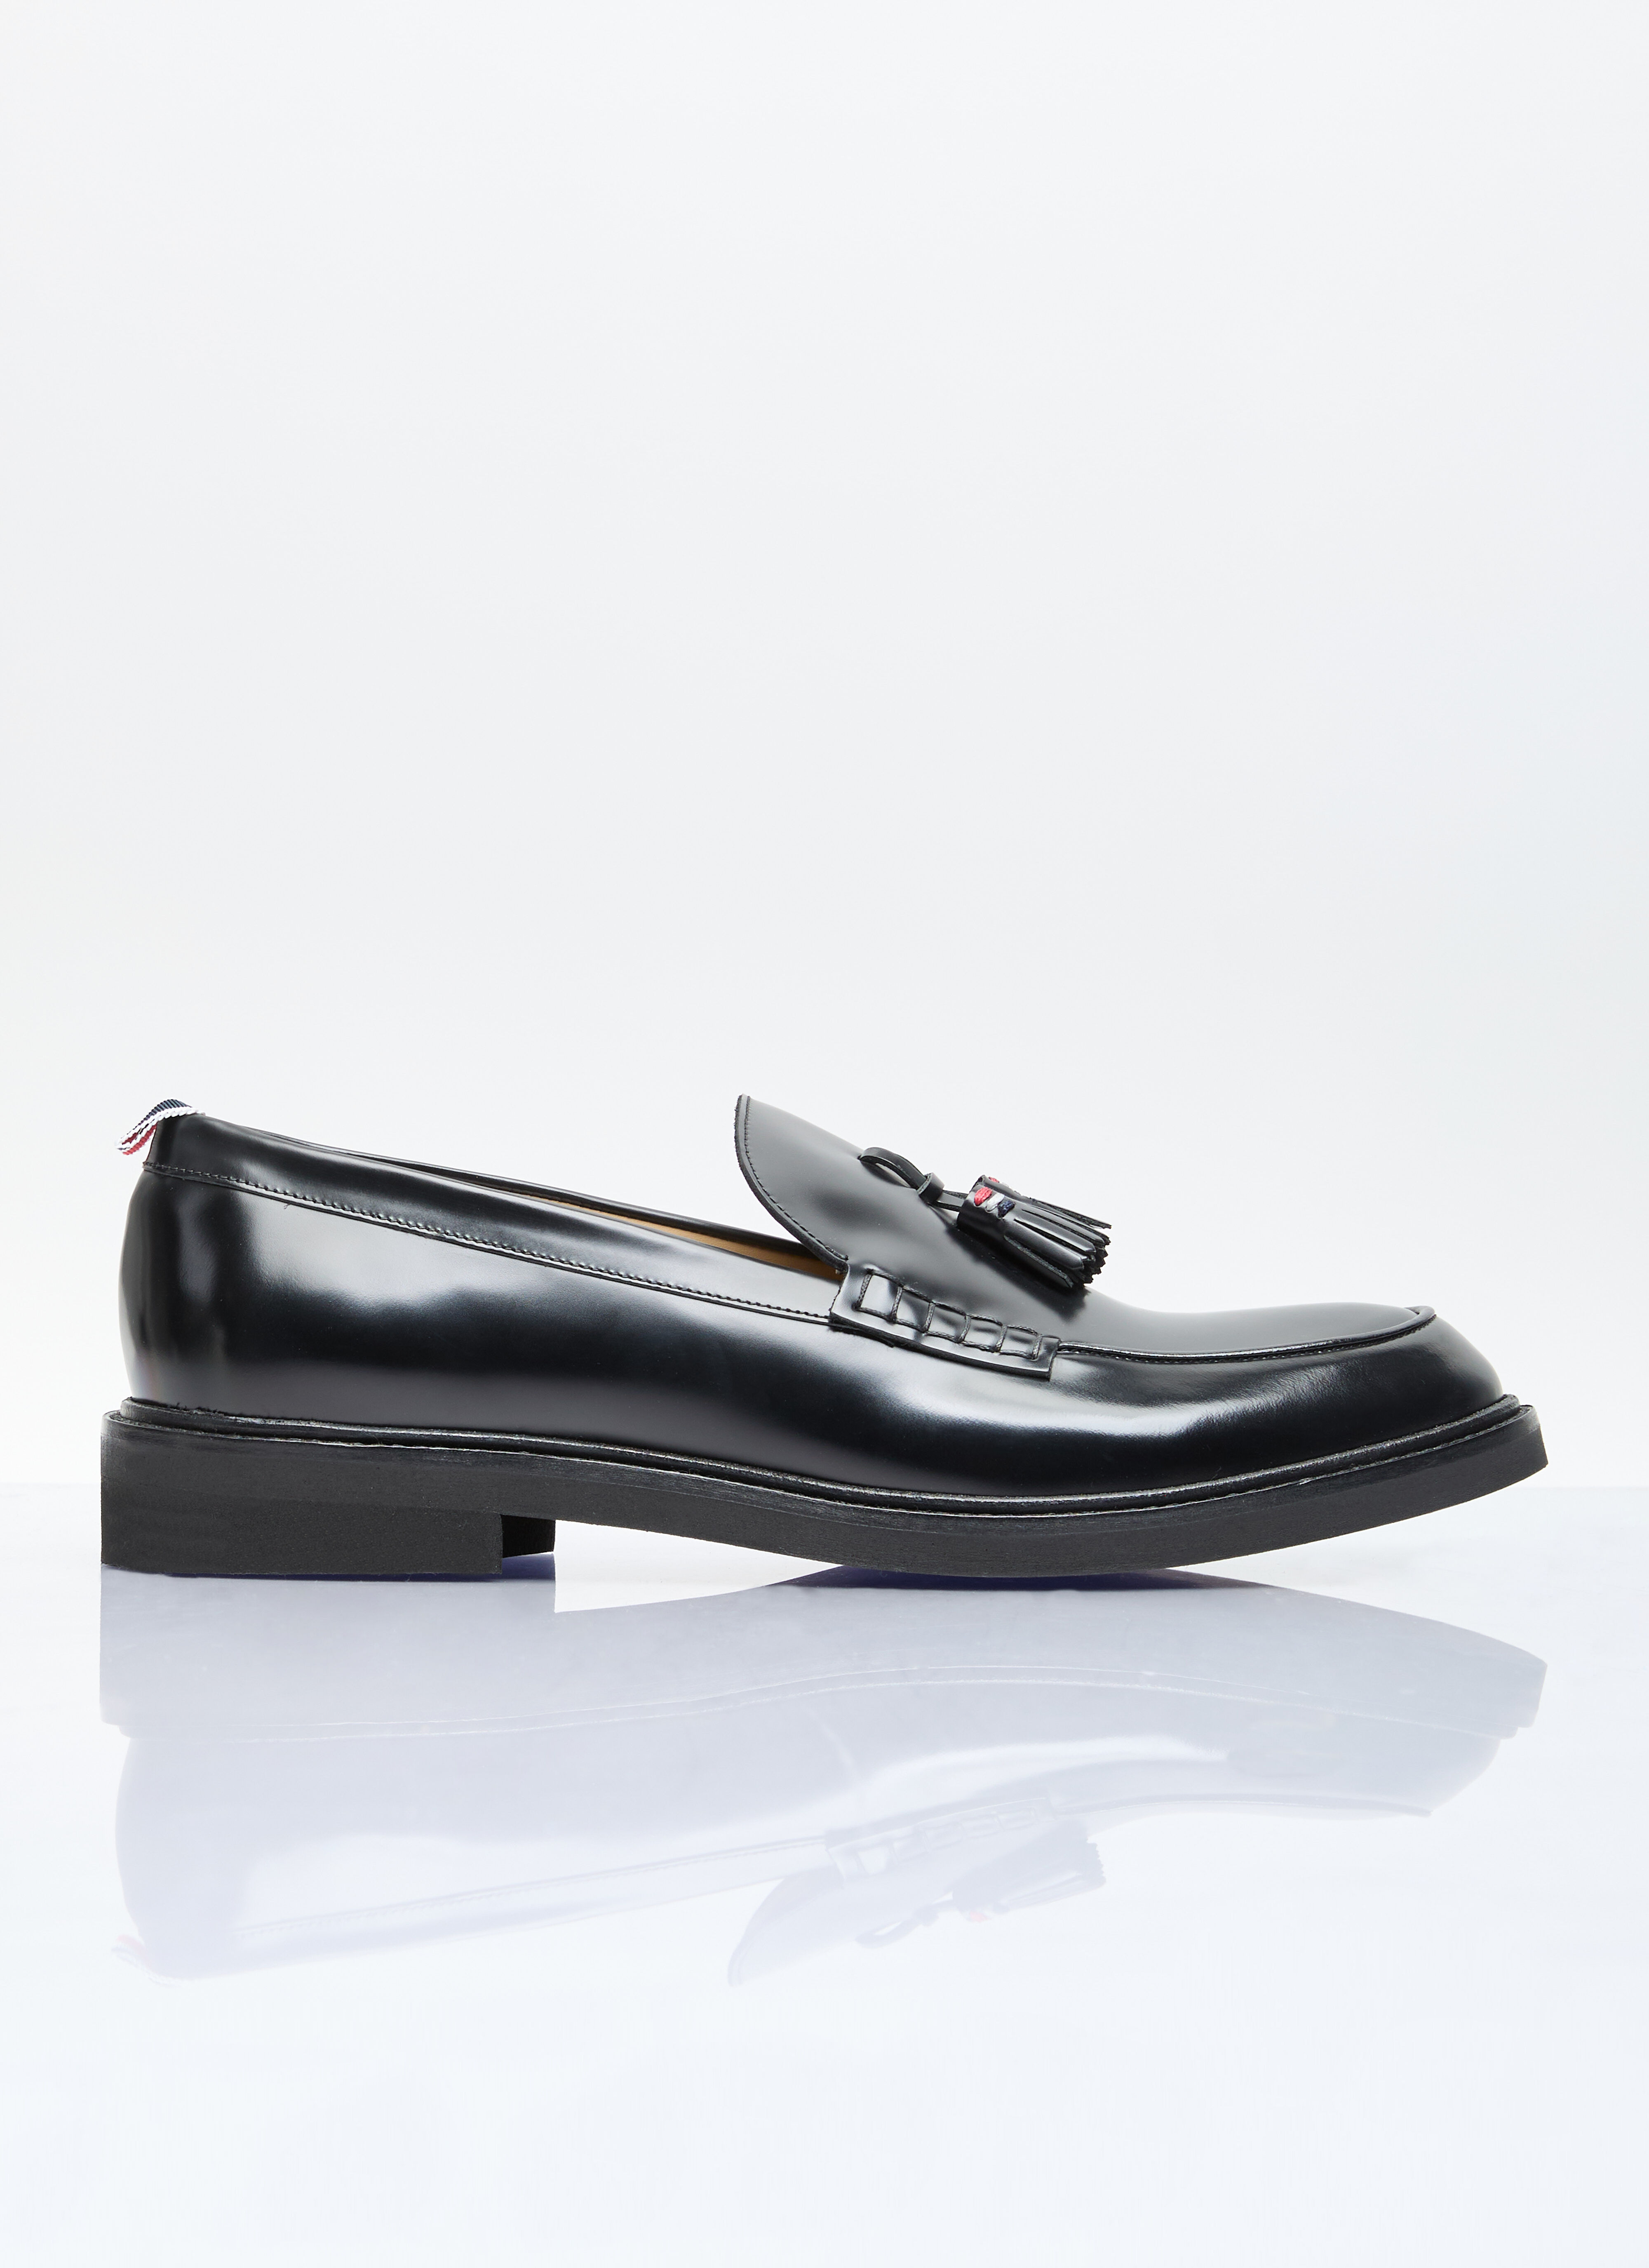 New Balance Tassel Loafers Black new0156021